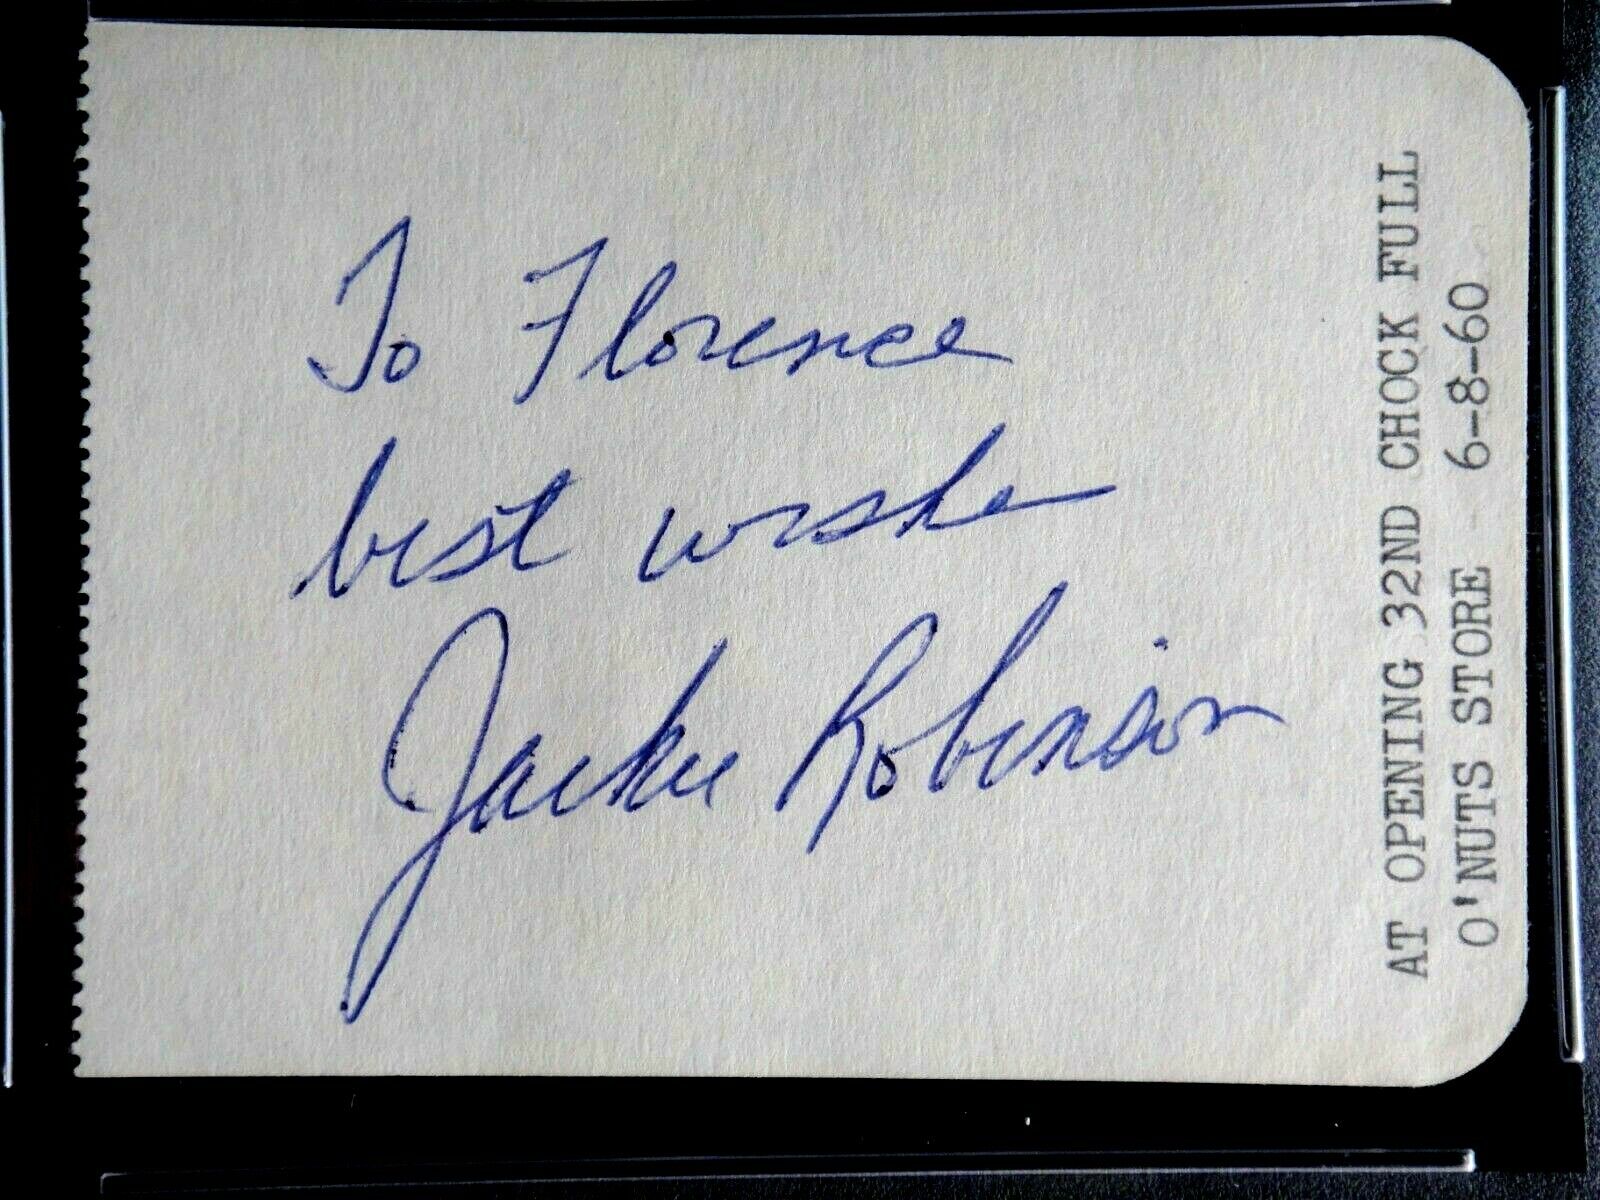 Jackie Robinson Autographed Signed PSA/DNA Certified Grade 8 1960 Album Page Autograph Auto Image a